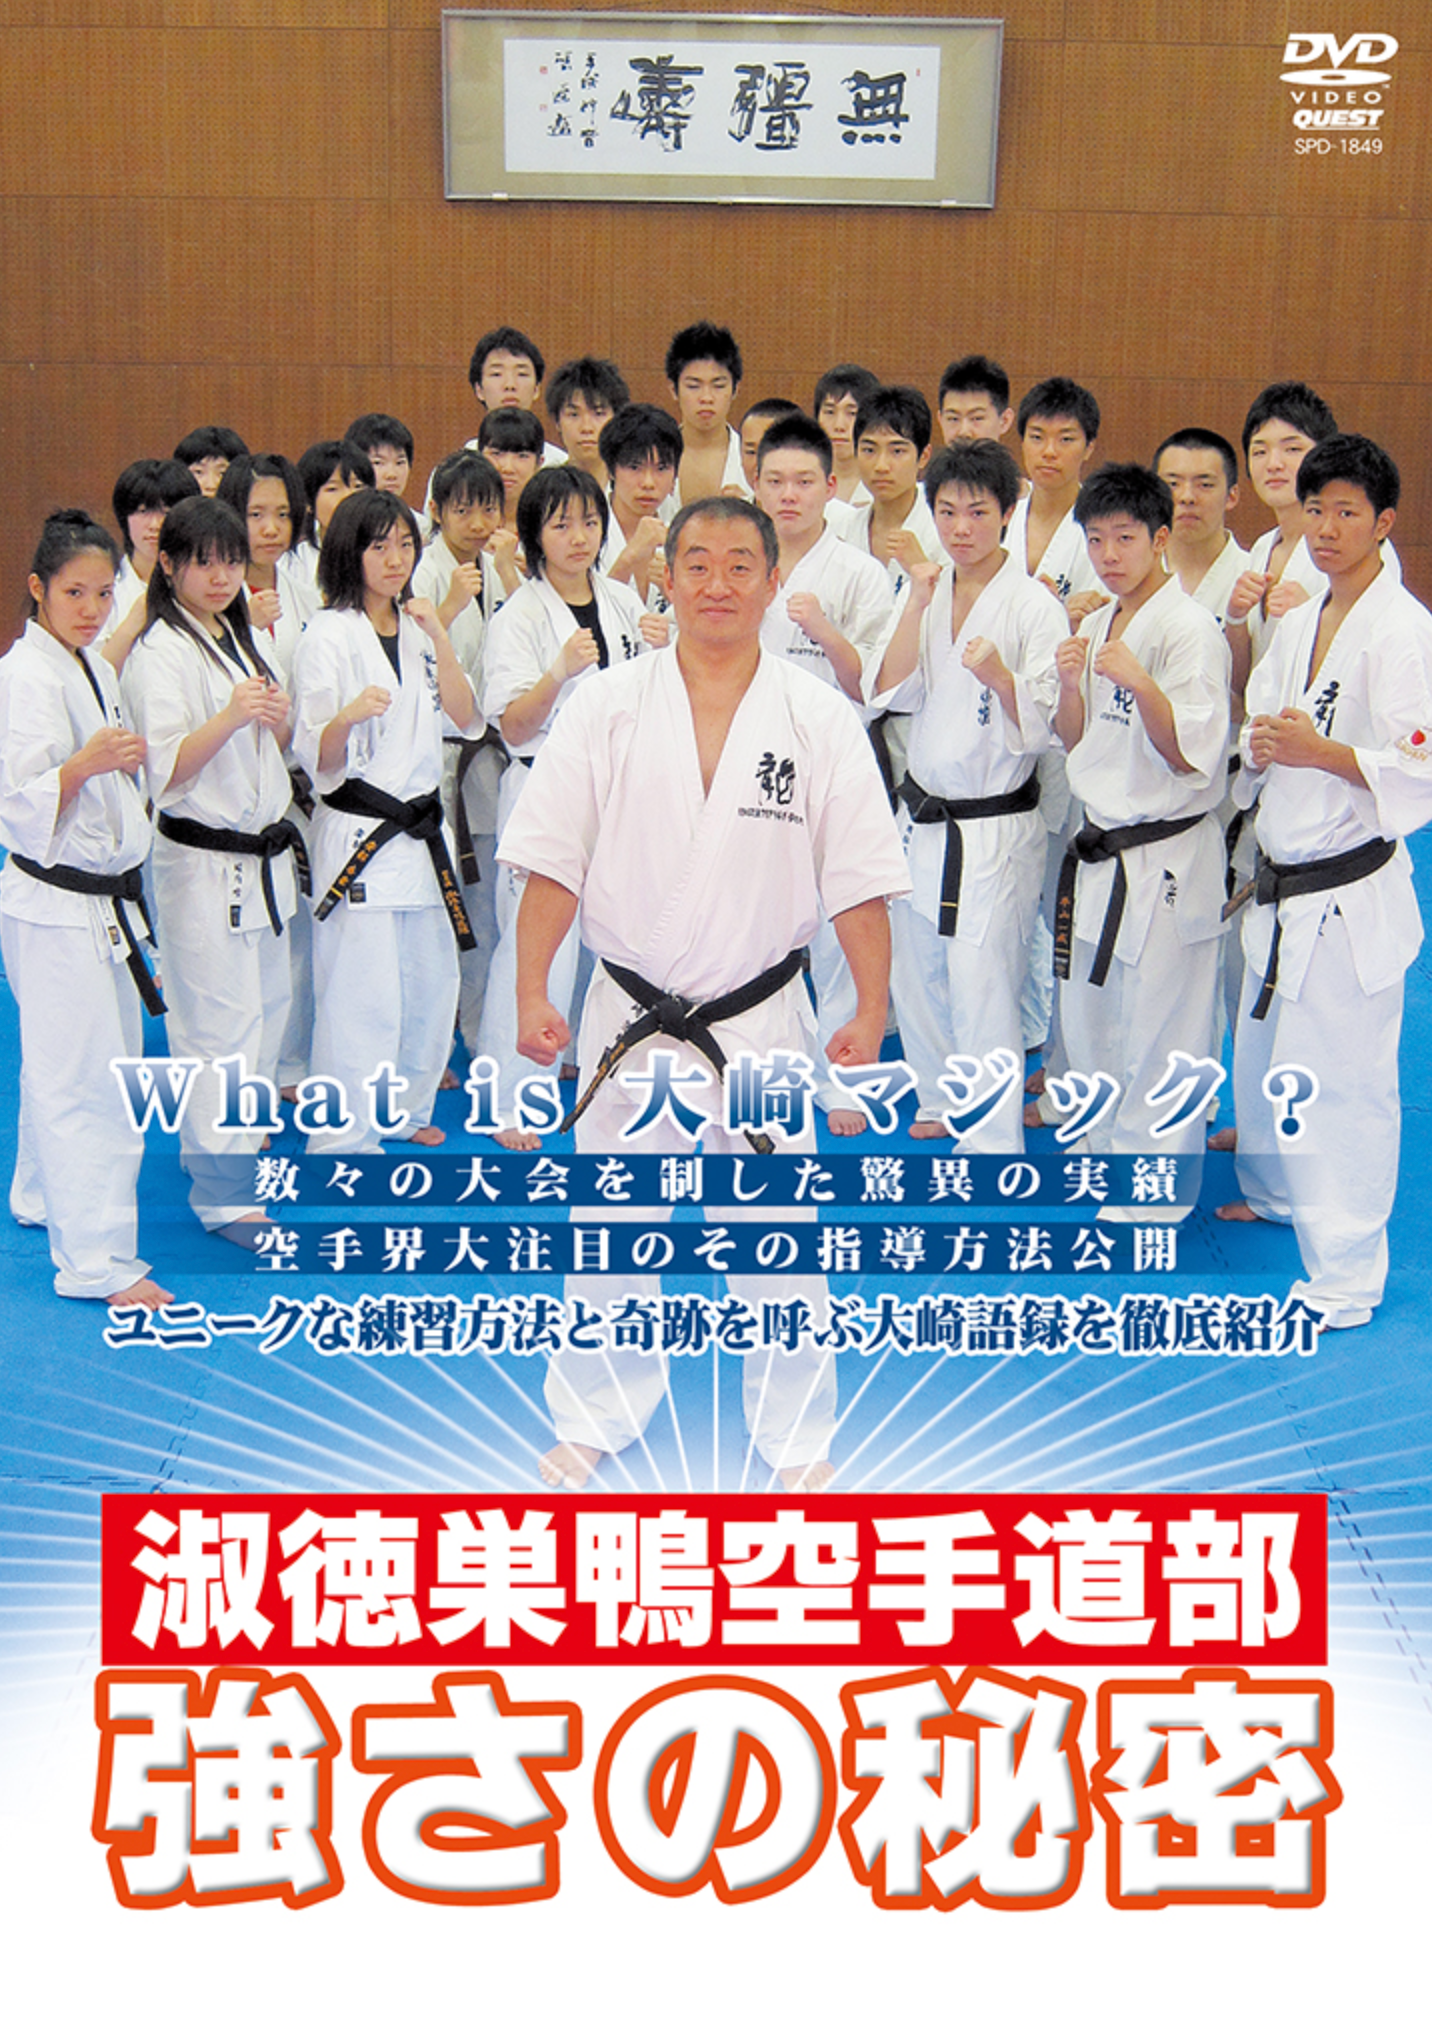 Shukutoku Sugamo: Secrets of Strength DVD with Yoshiki Osaki - Budovideos Inc